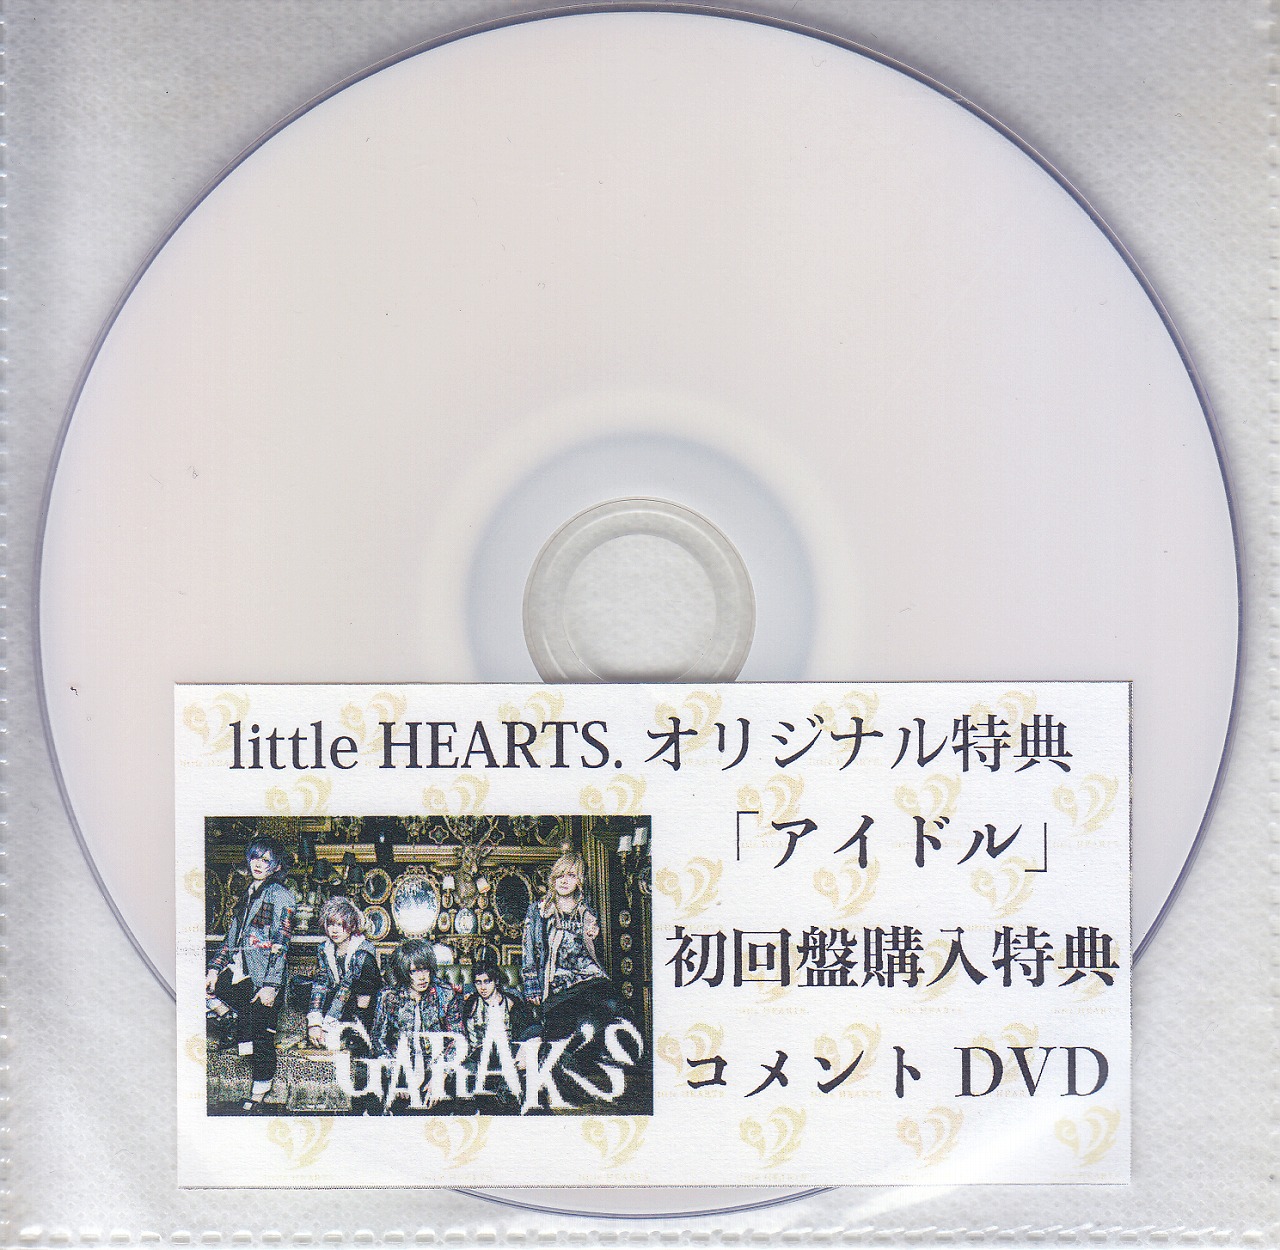 GARAK'S ( ガラクズ )  の DVD 【little HEARTS.】アイドル 初回盤購入特典コメントDVD